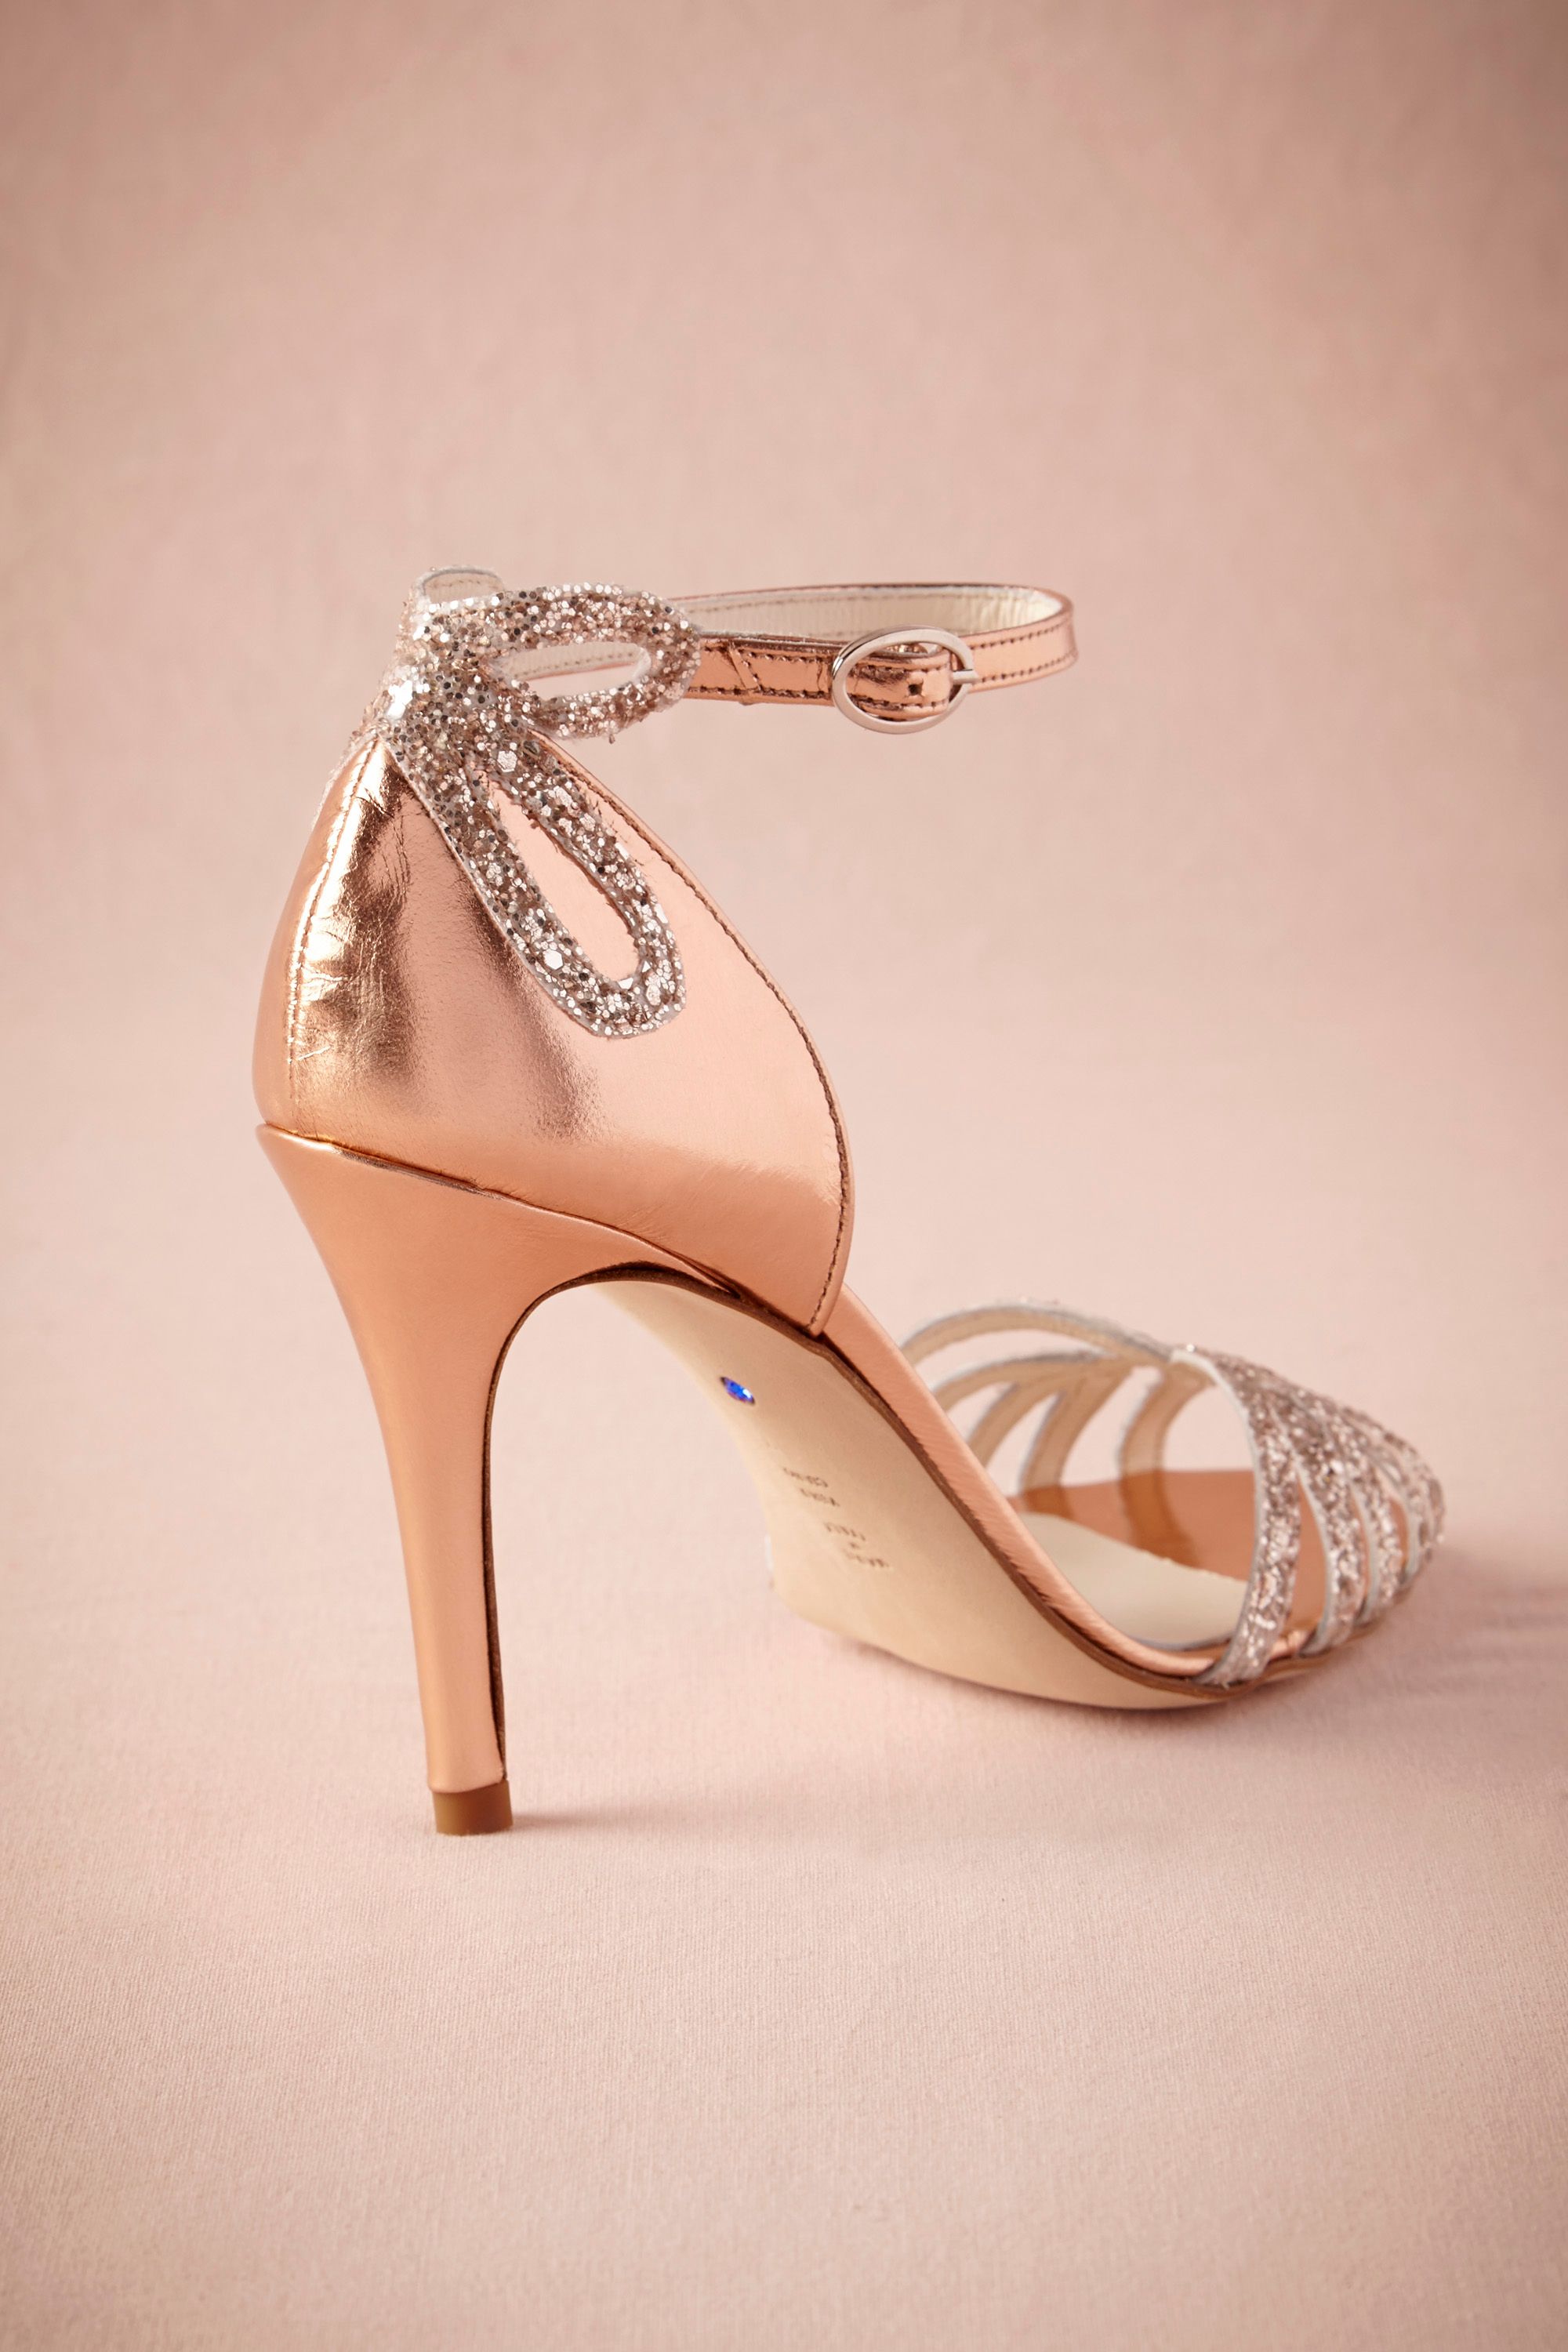 bridesmaid rose gold shoes